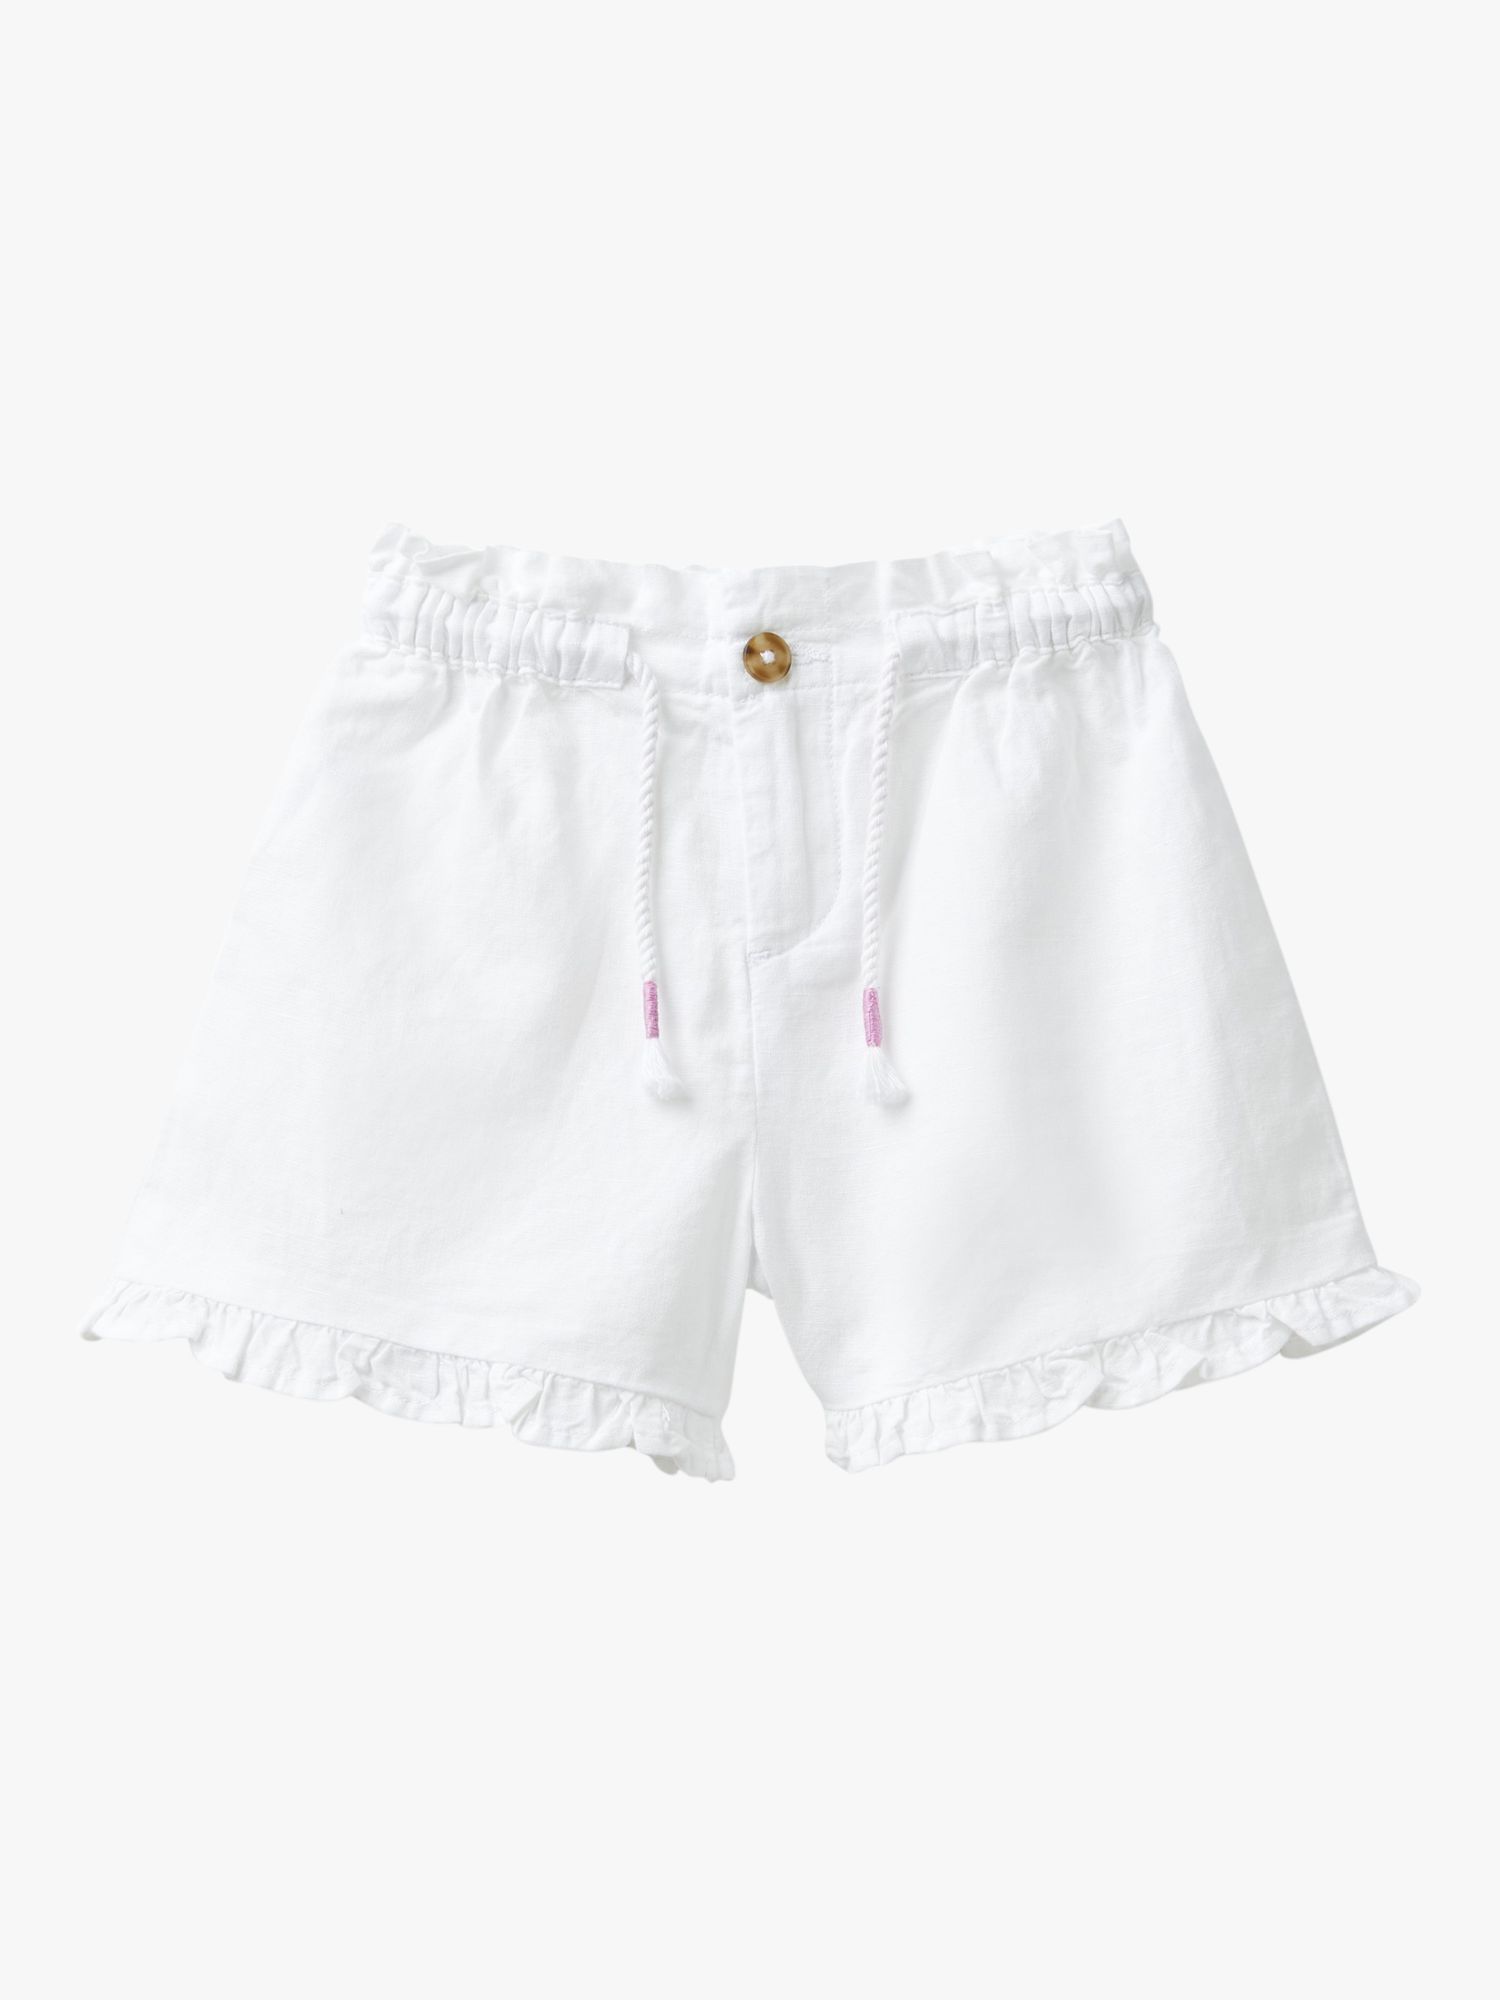 Benetton Kids' Linen Blend Drawstring Shorts, Optical White, 3-4 years